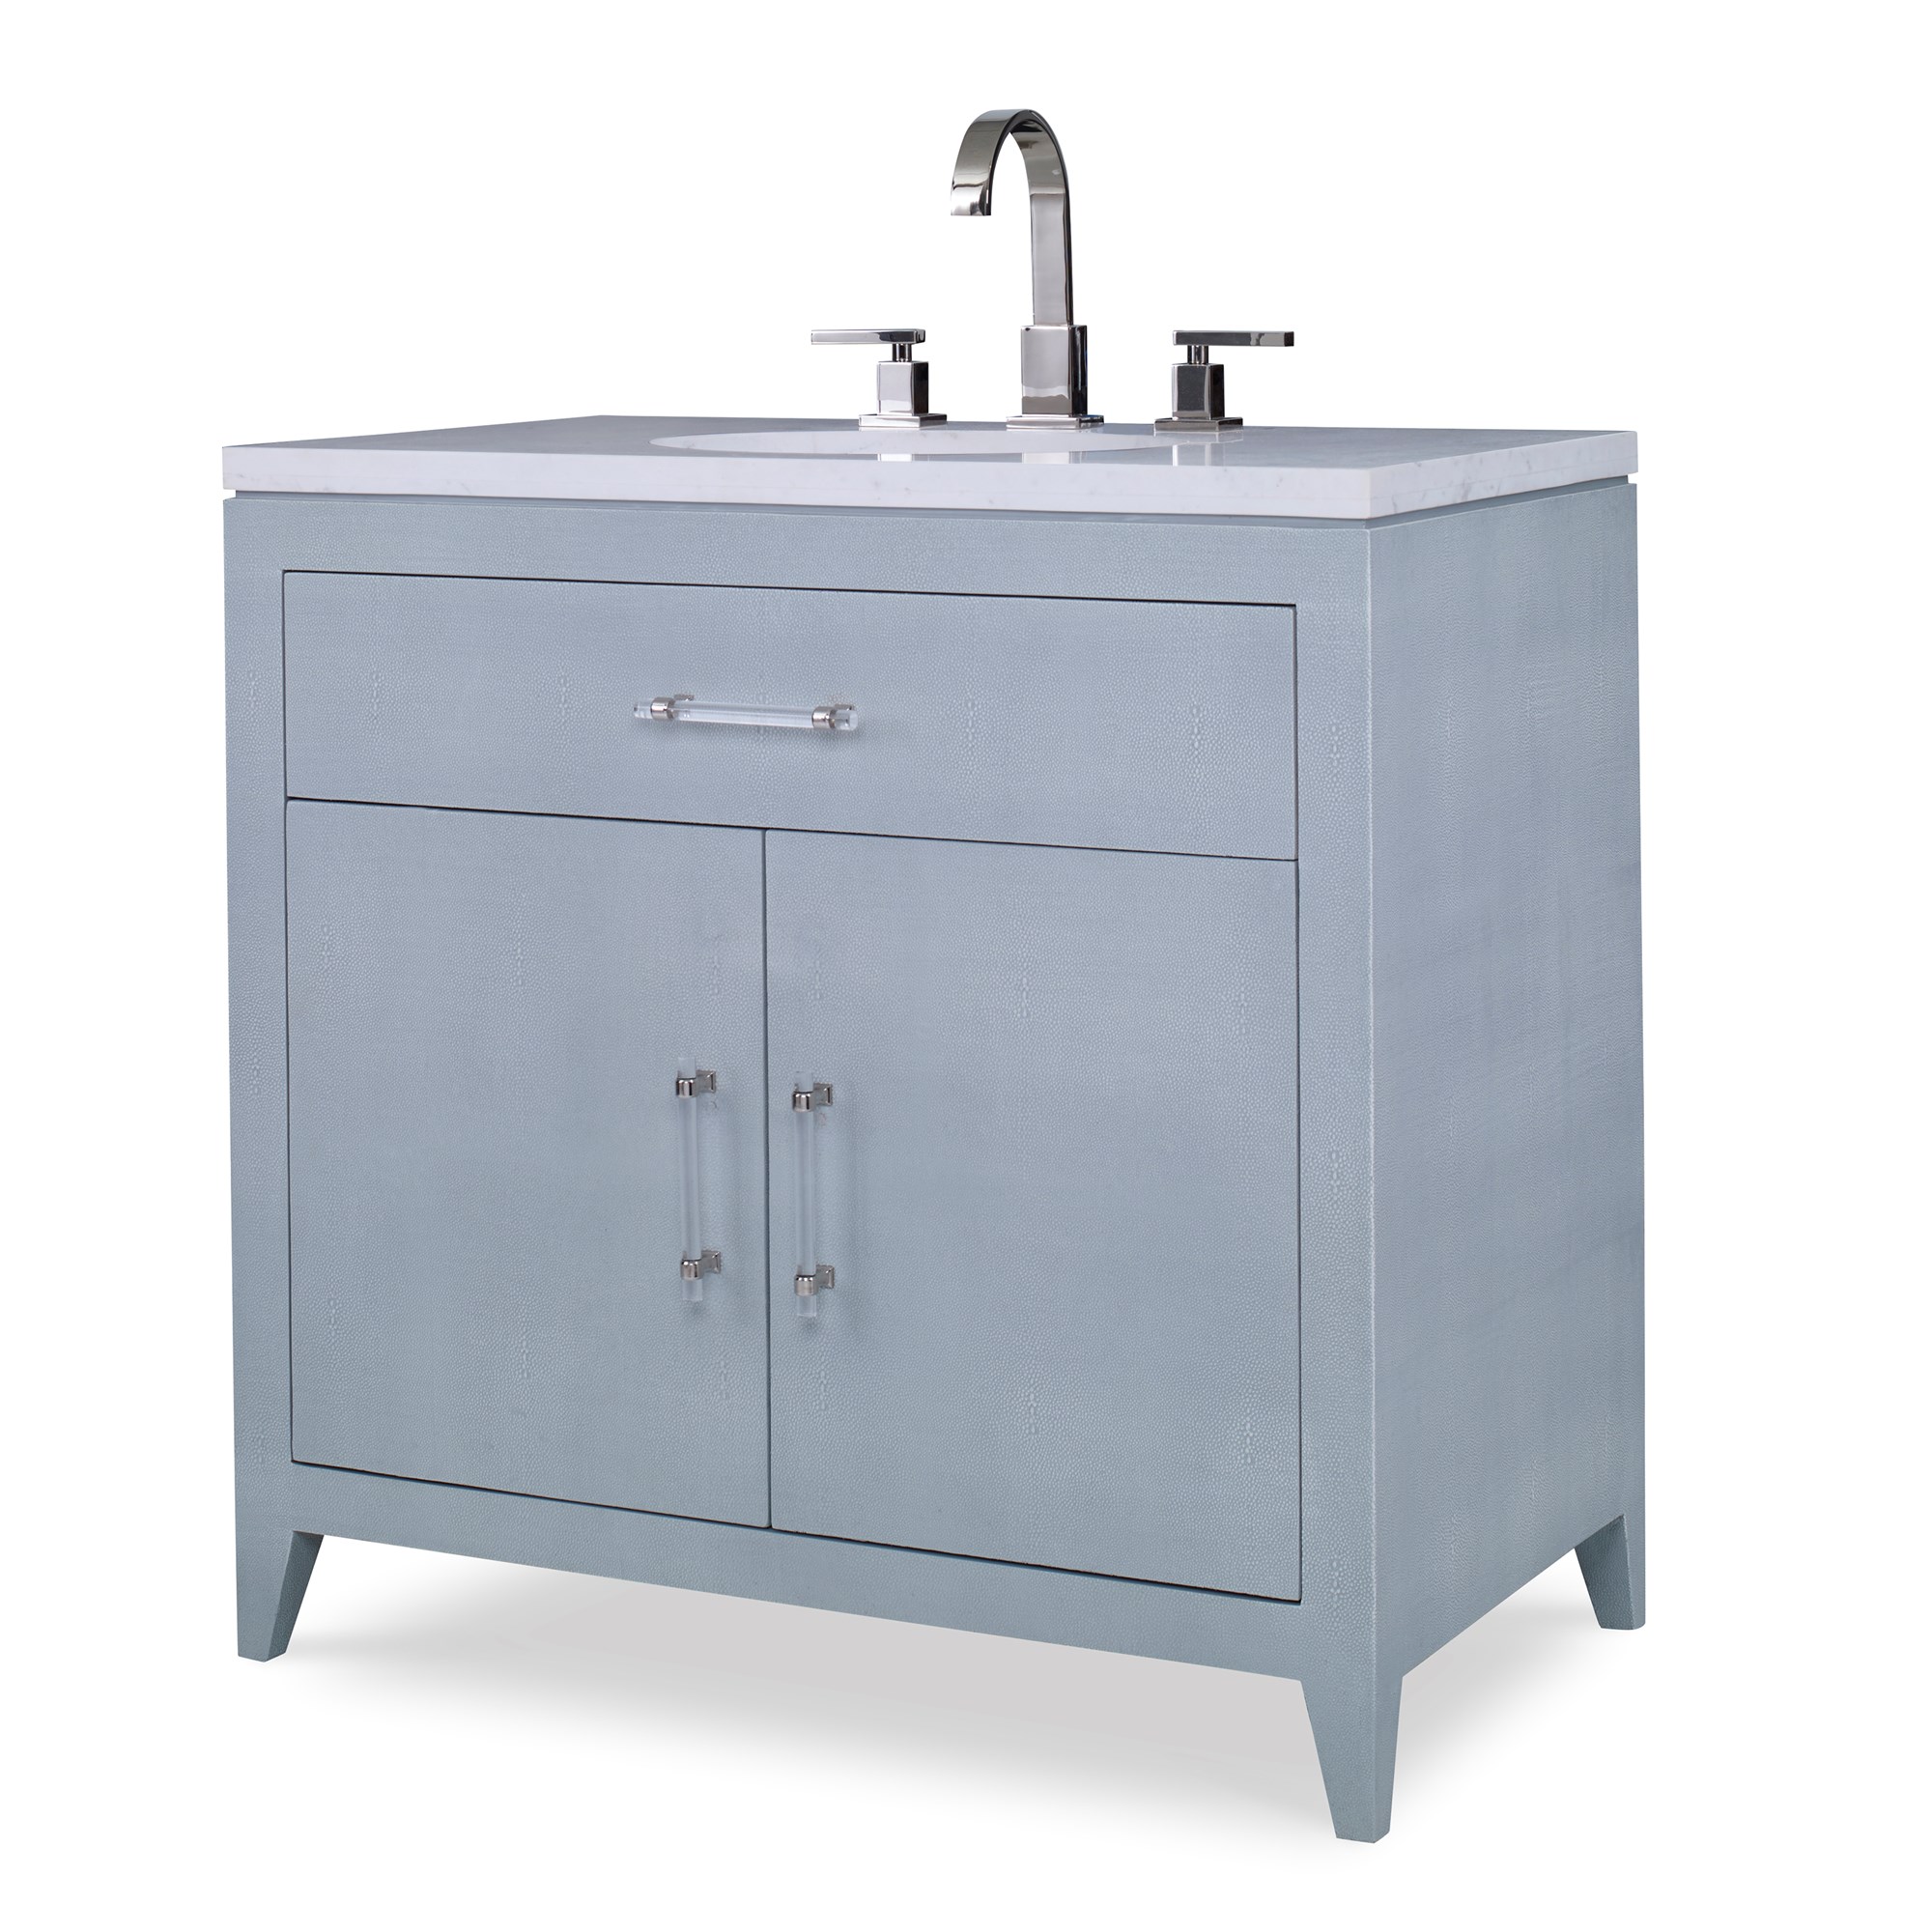 William H. Harvey 090360 Blue Designer Sink Plunger